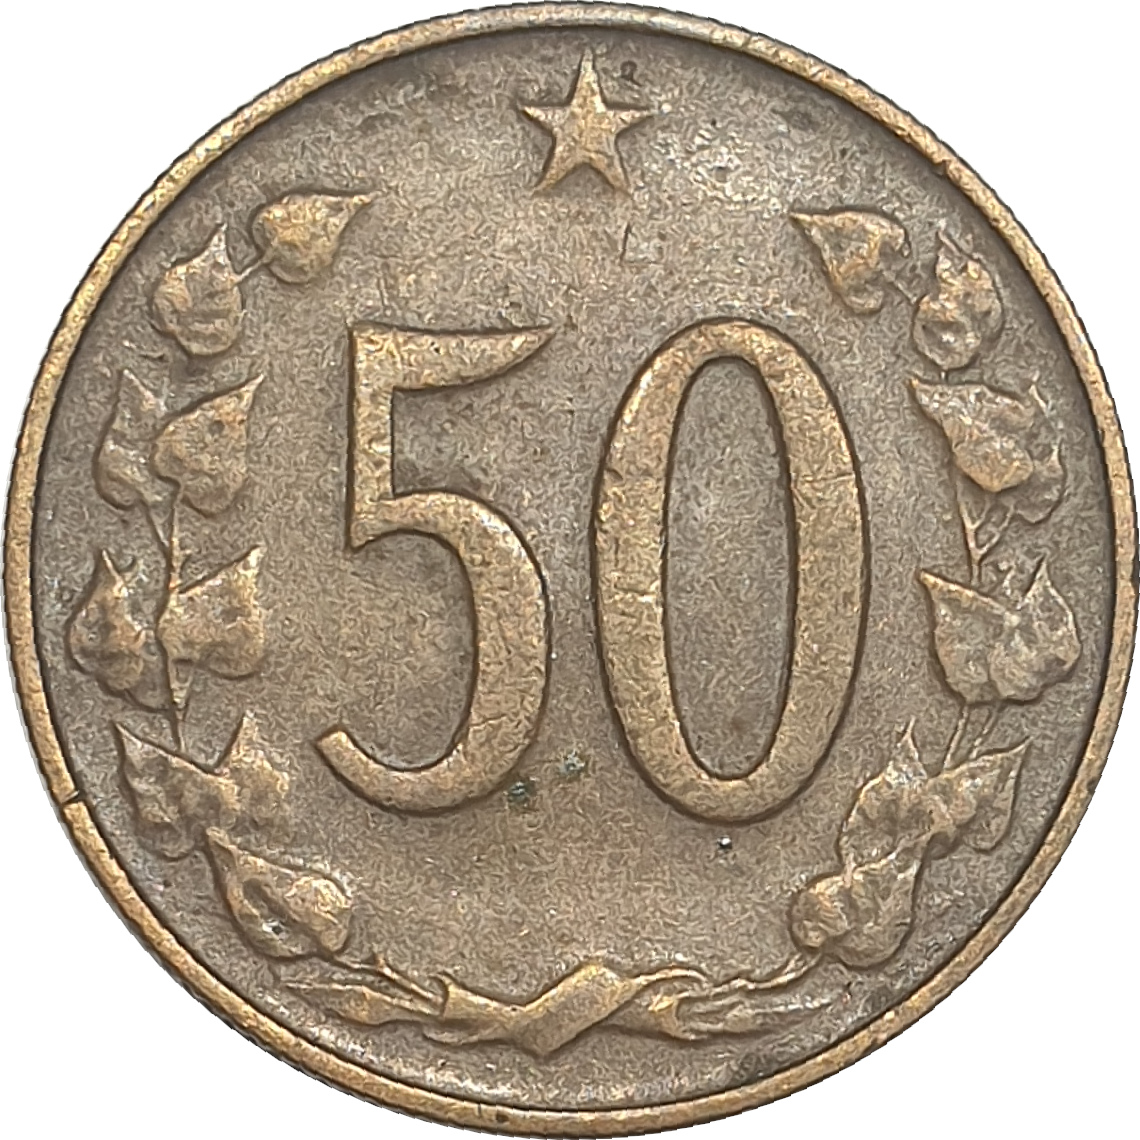 50 haleru - Small heraldic Lion